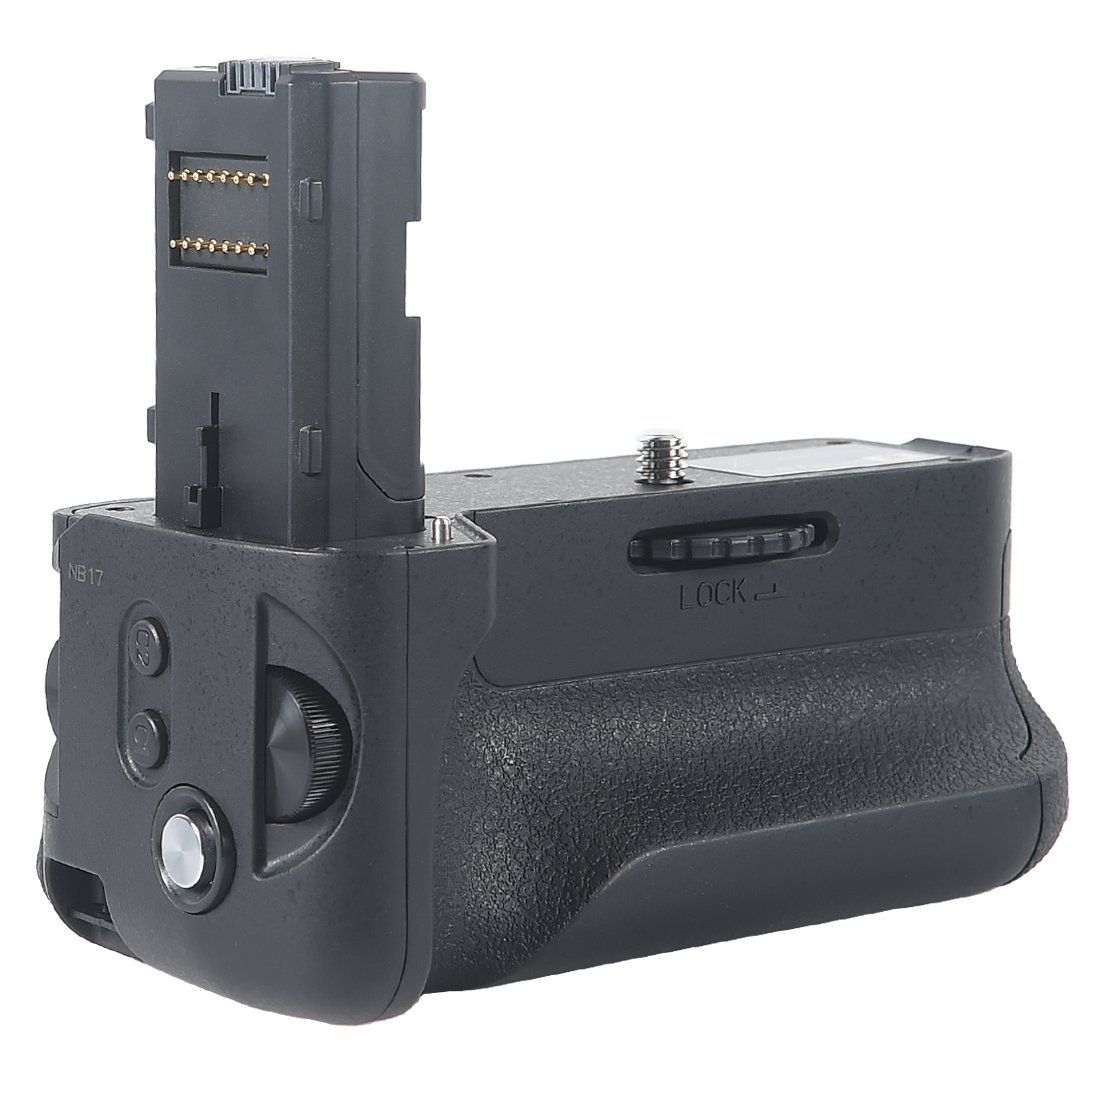 DSTE® Batterie Griff für Sony A7 II A7 M2 A7R II Digital Kamera als VG-C2EM